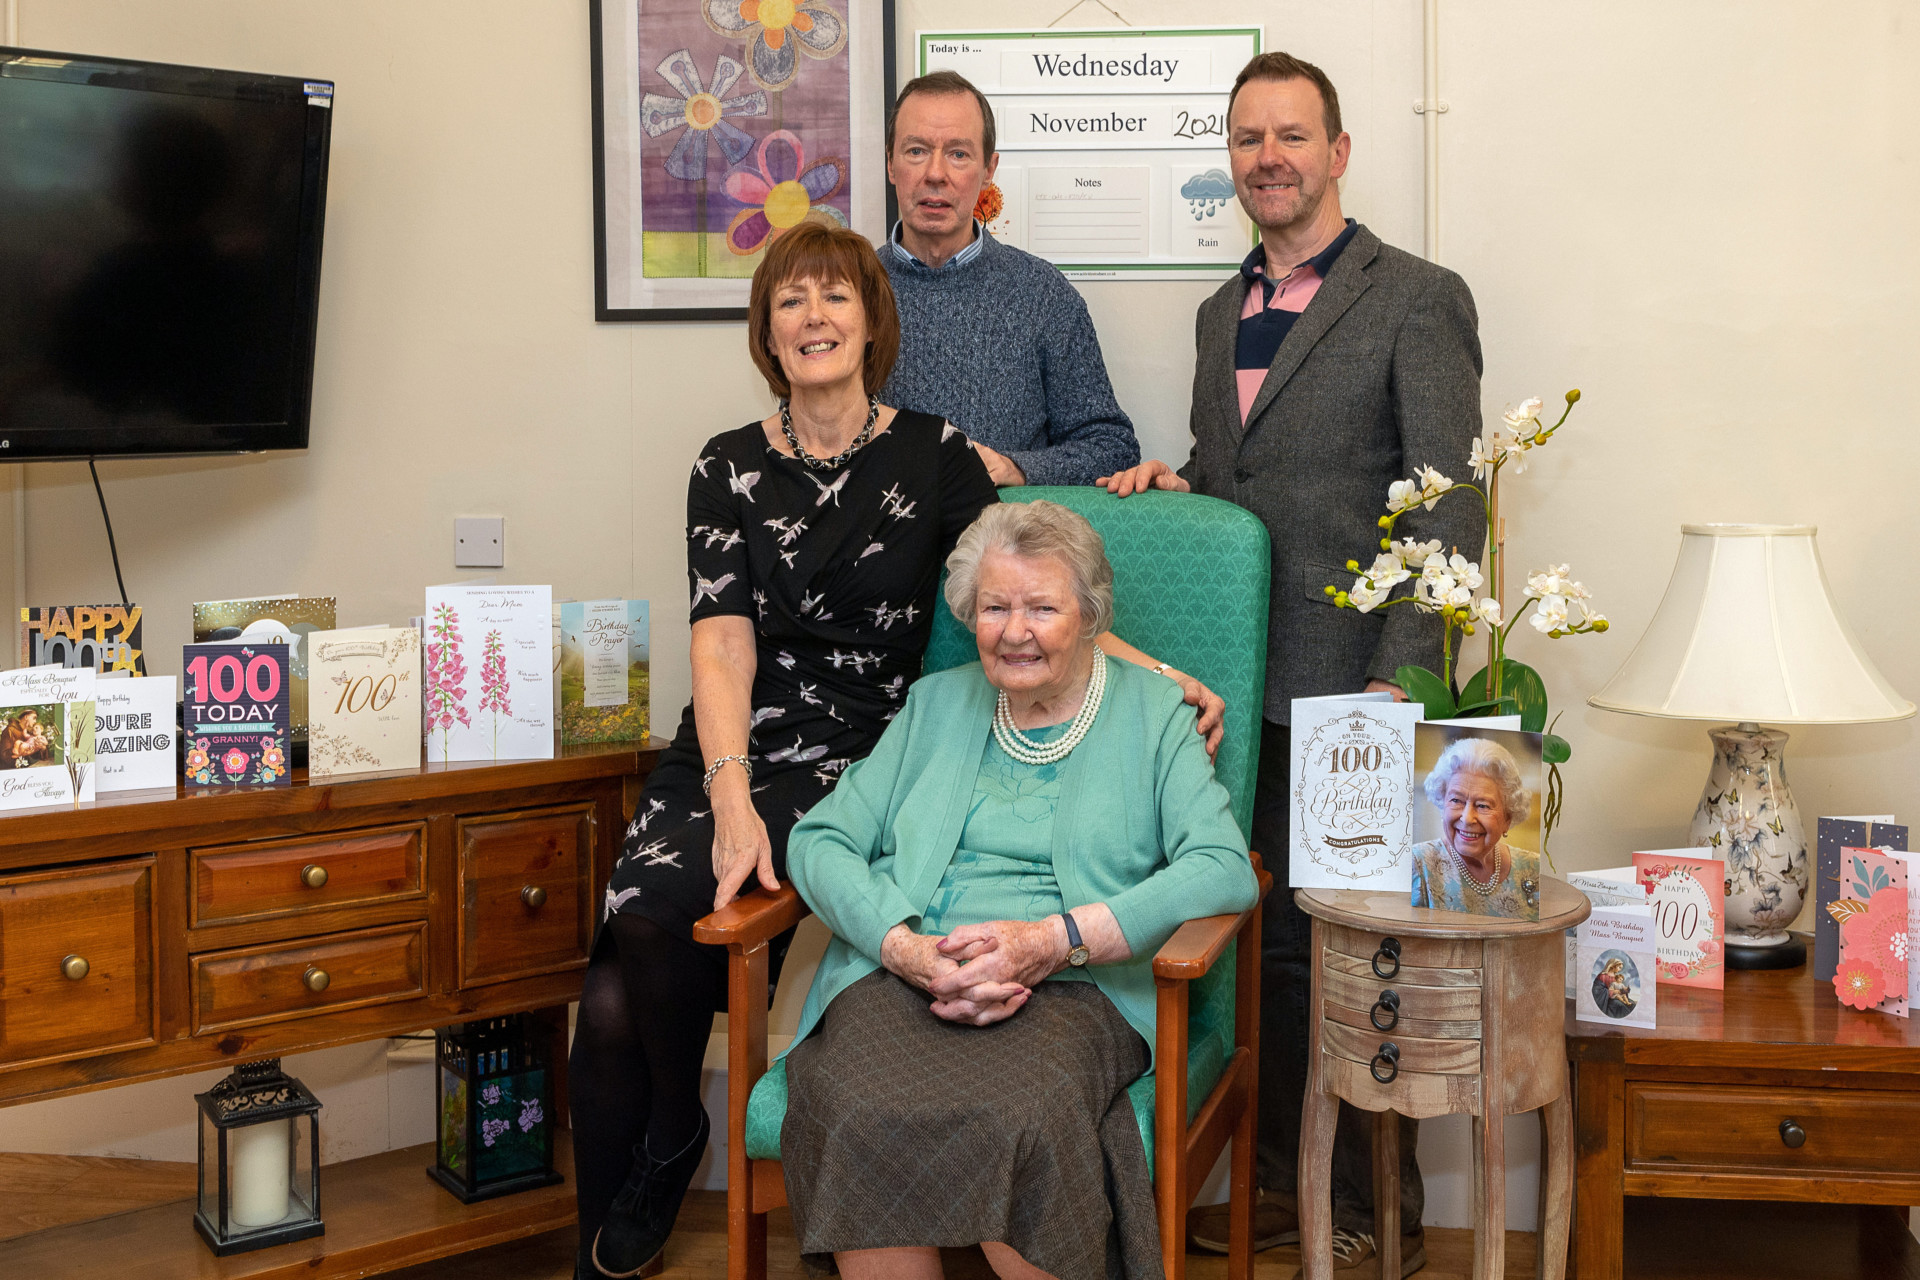 Delight as Nan celebrates 100th birthday with family